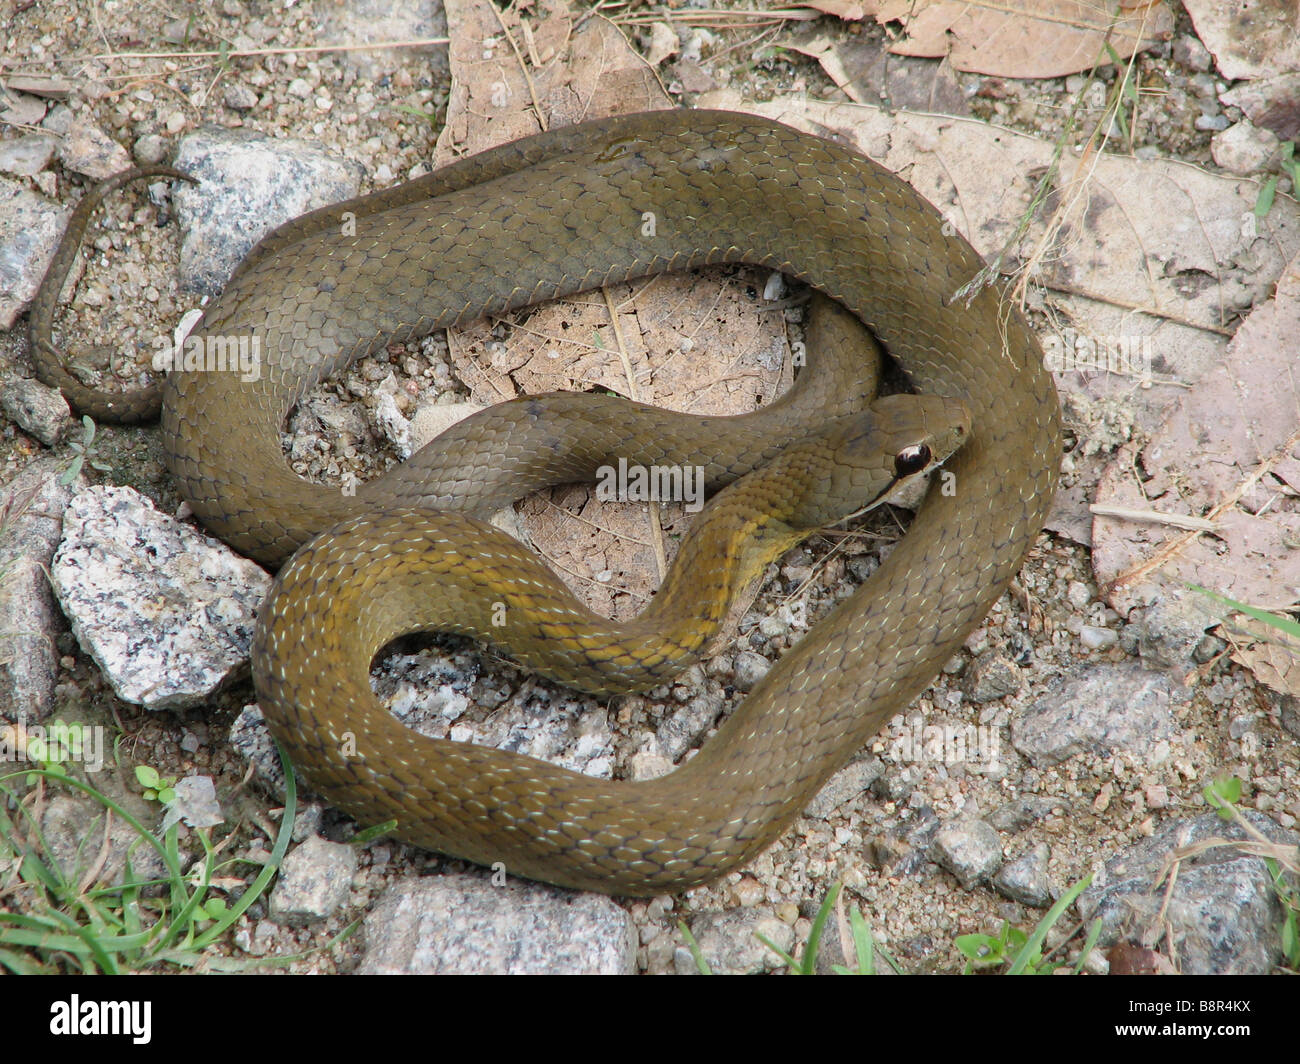 Forest Water Snake (Bibilava infrasignatus) on rocky ground in Ranomafana National Park, Madagascar. Stock Photo